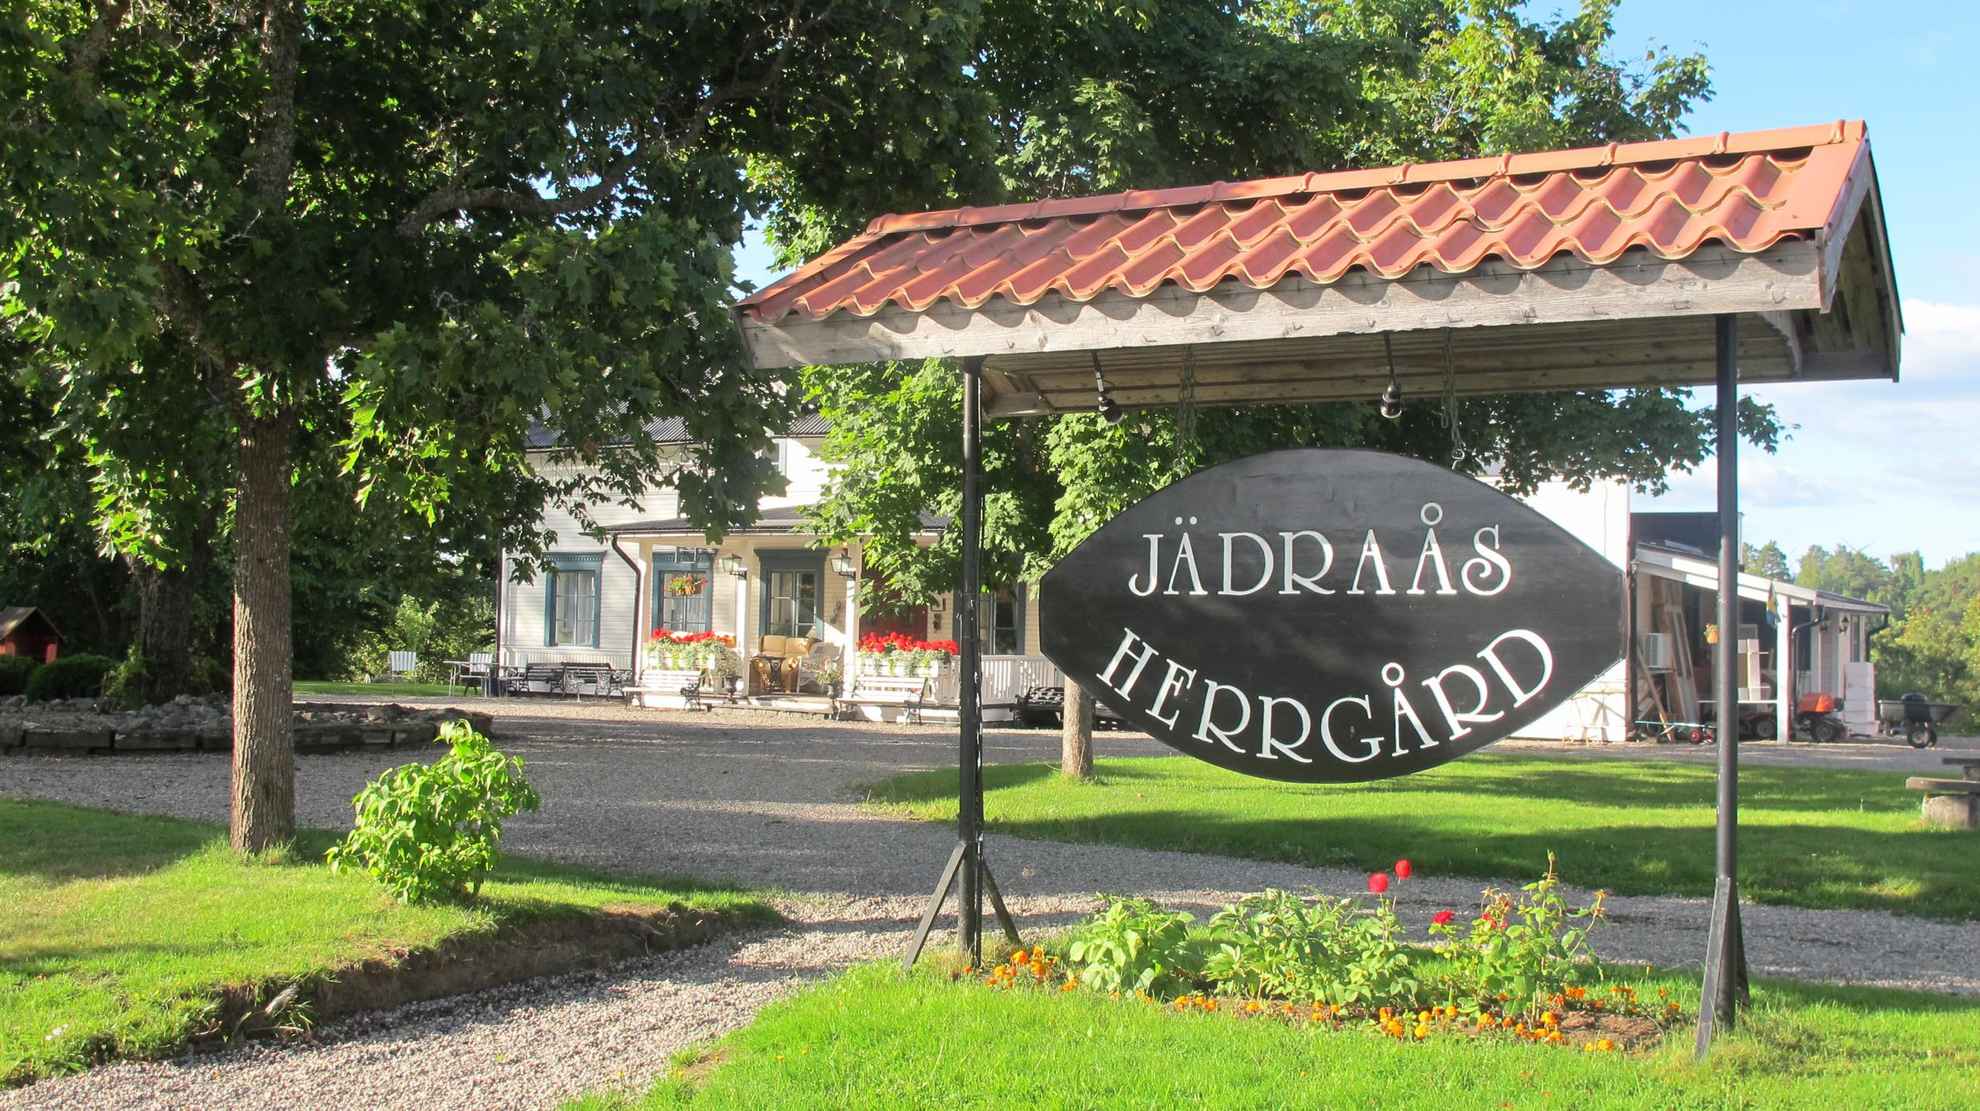 A sign that says "Jädraås Herrgård" in front of the manor STF Järdaås Herrgård.